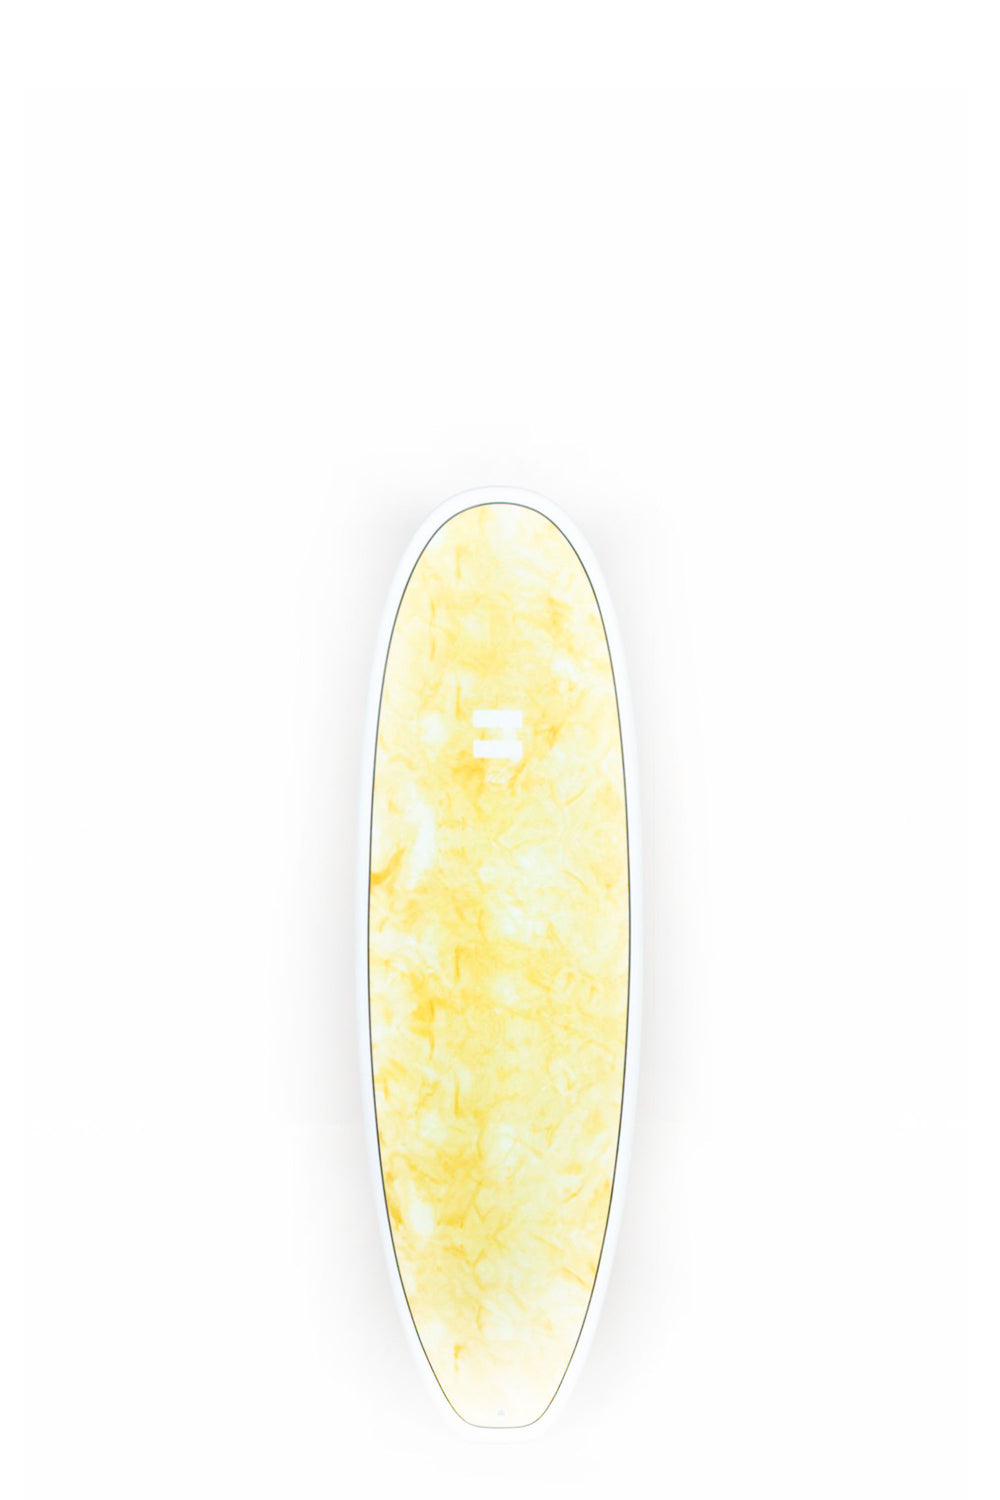 Pukas Surf Shop - Indio Endurance - PLUS Swirl Effect Yellow - 6´6